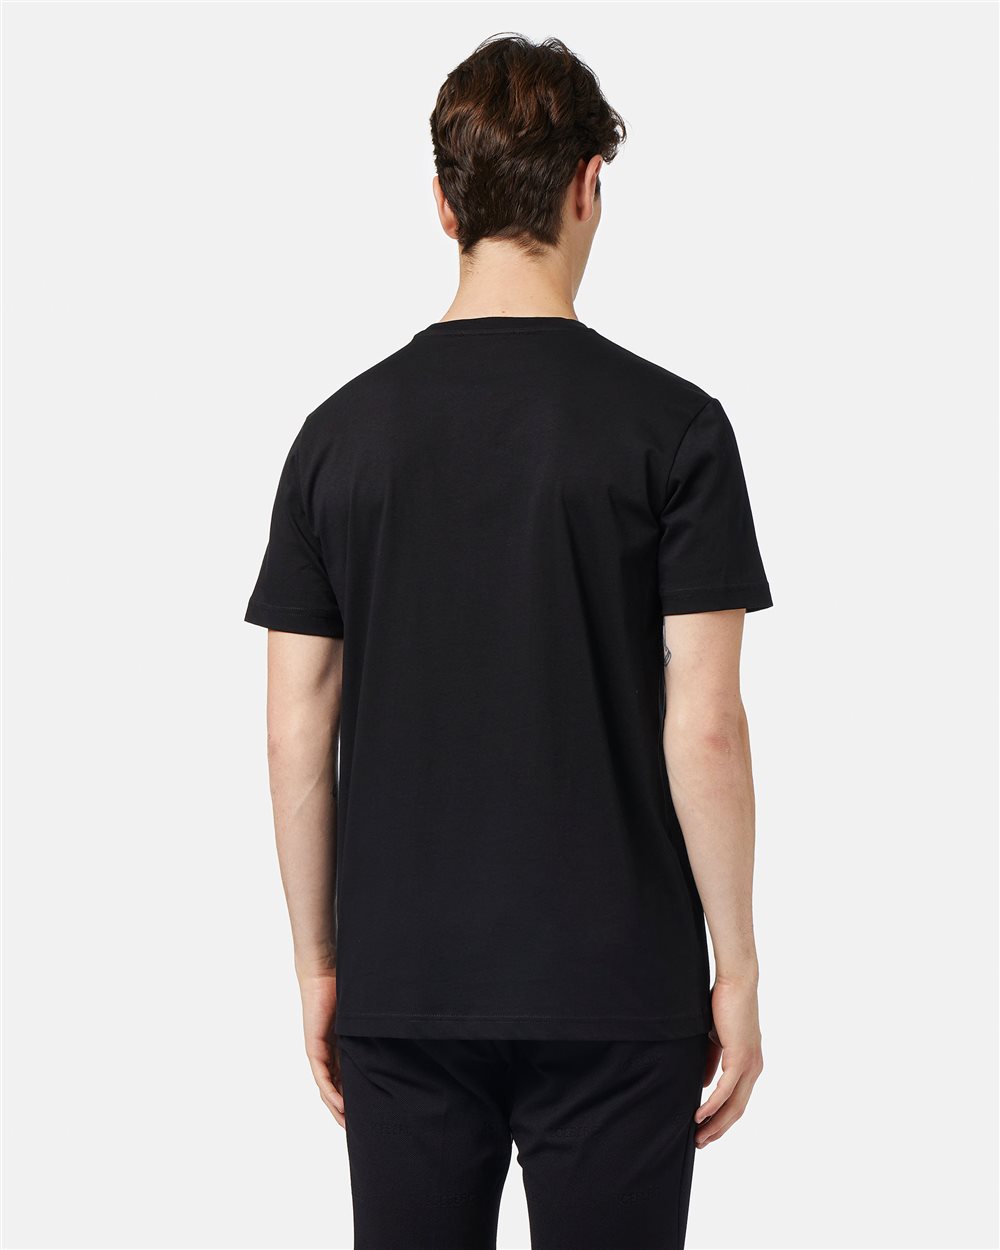 Black T-shirt with logo - Iceberg - Official Website